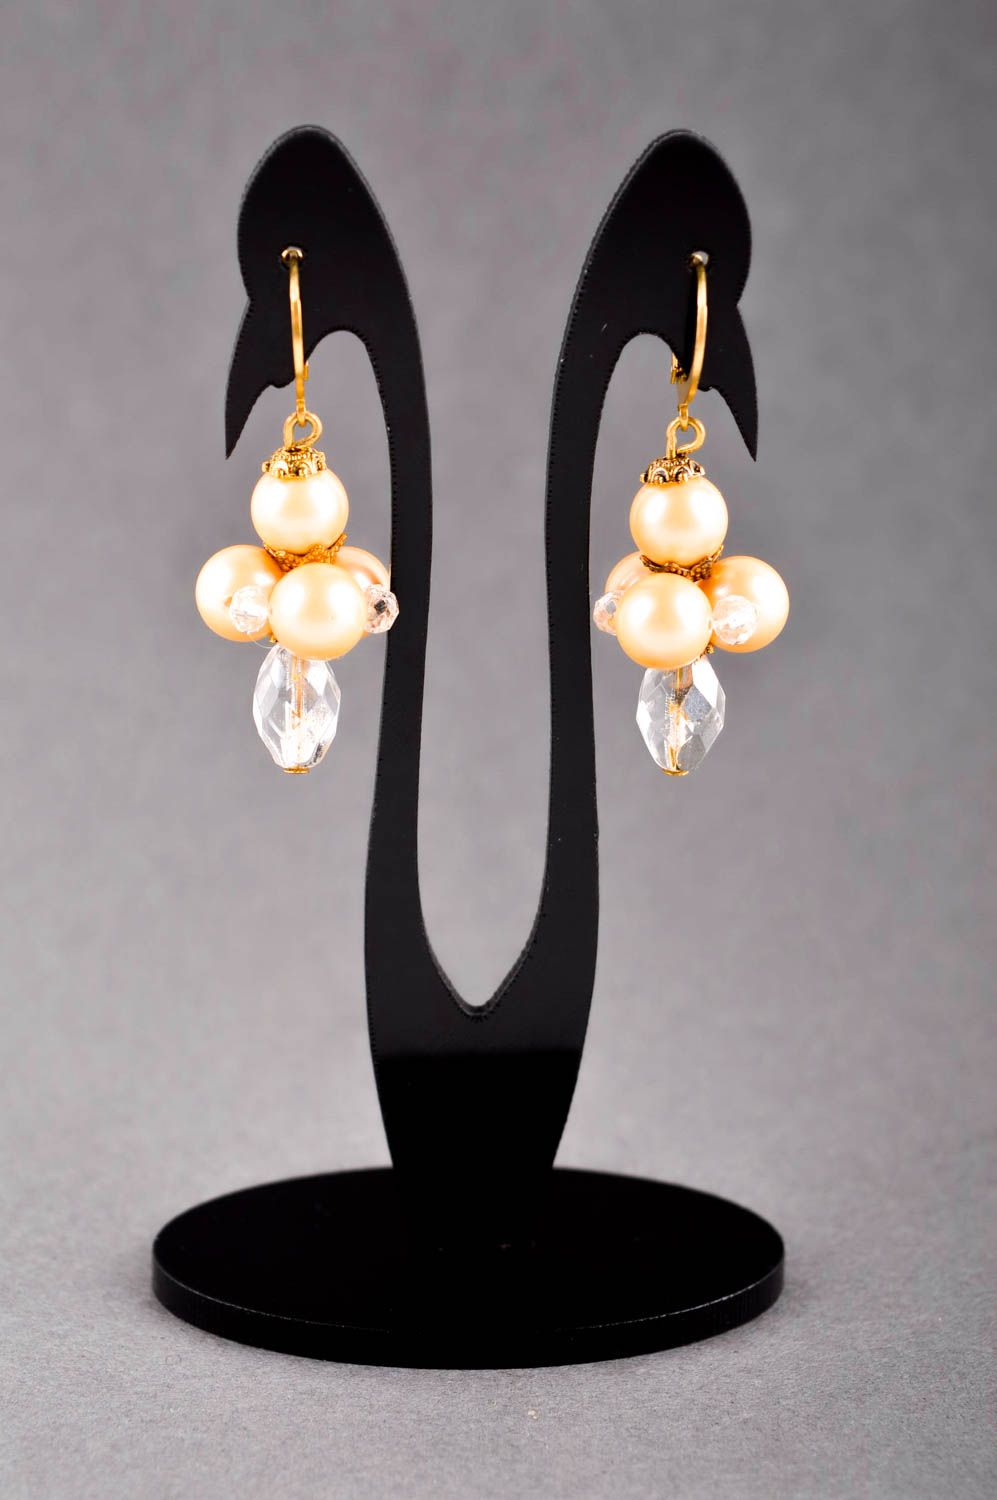 Handmade earrings stones earrings unusual earrings with charms designer jewelry photo 1